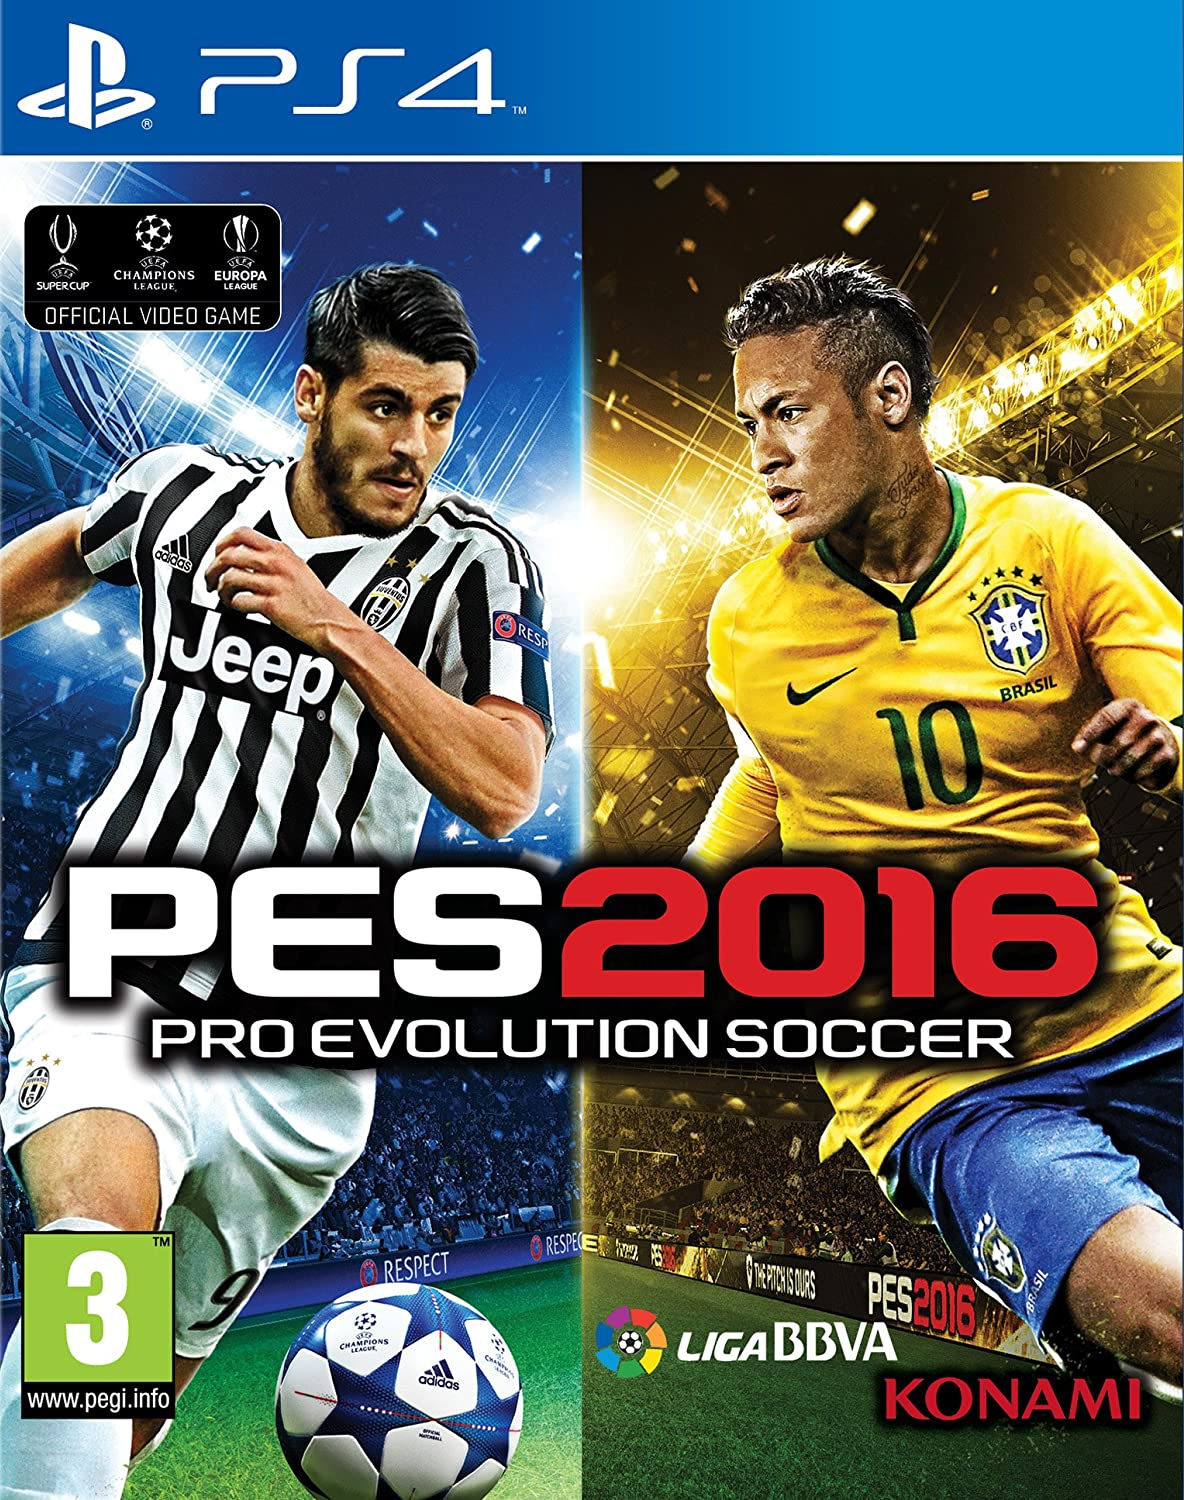 Pro Evolution Soccer 2016 Price history (App 375960) · SteamDB